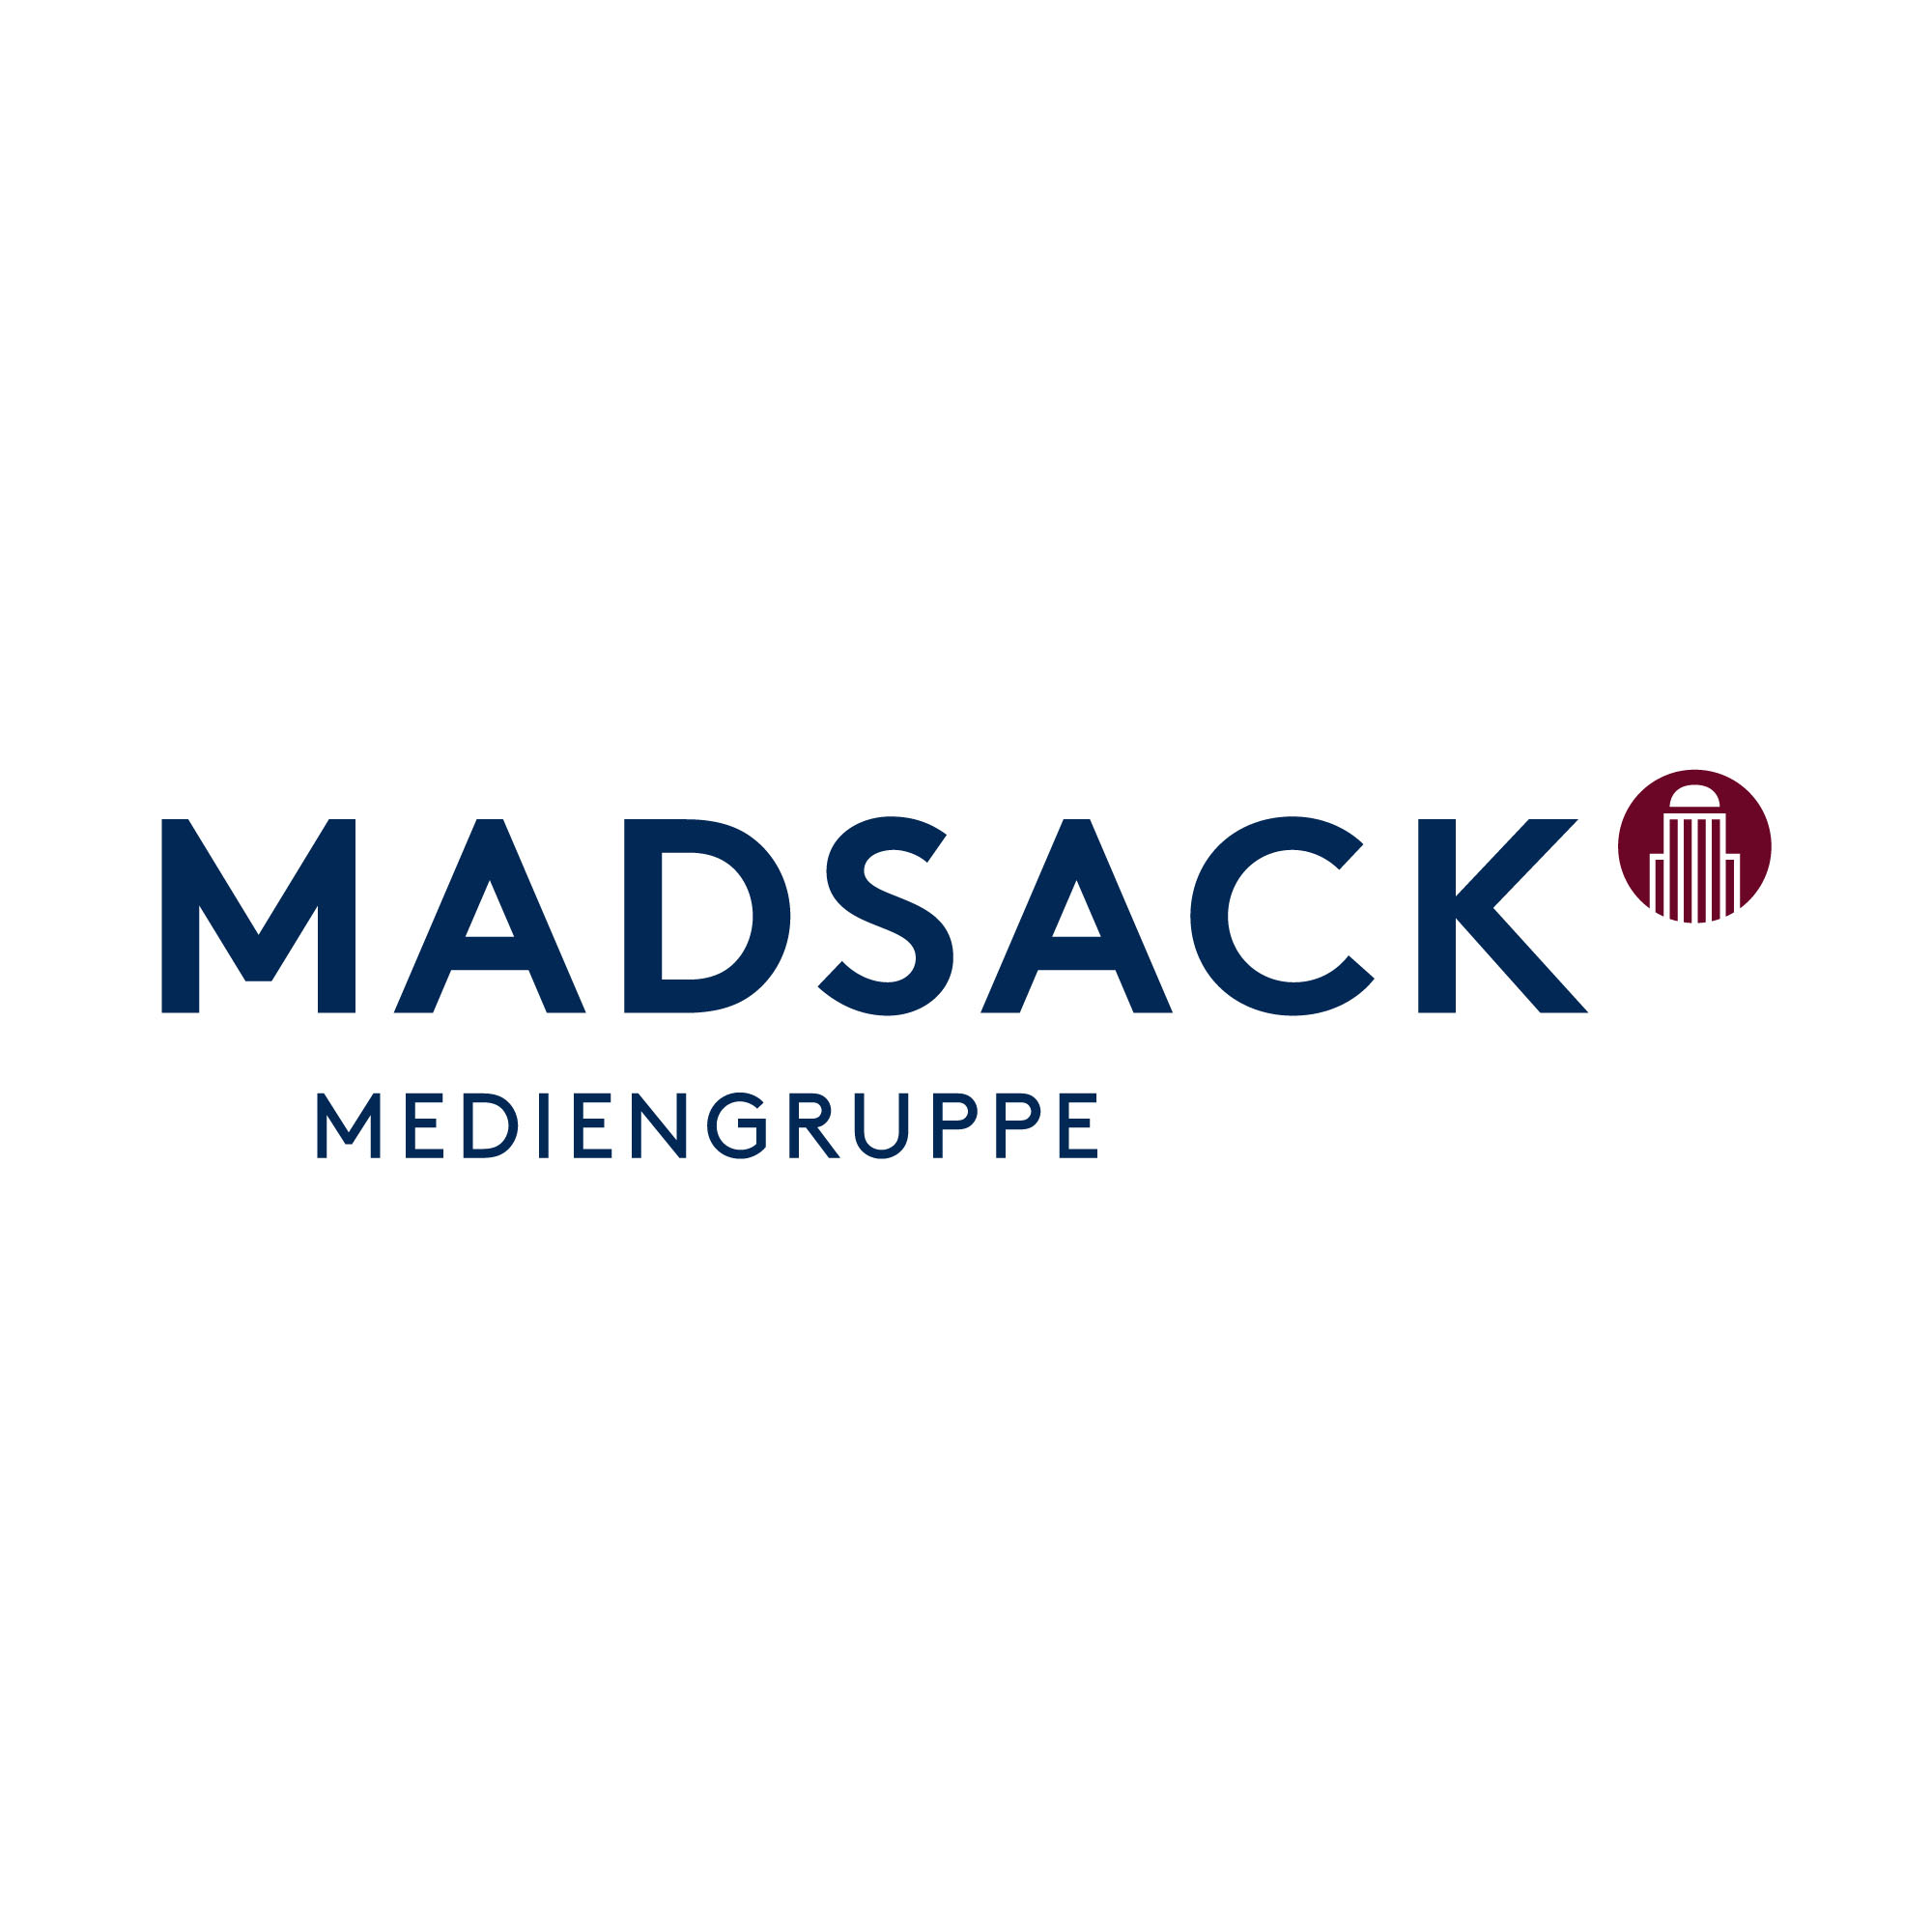 MADSACK erweitert Recruitinglösungen